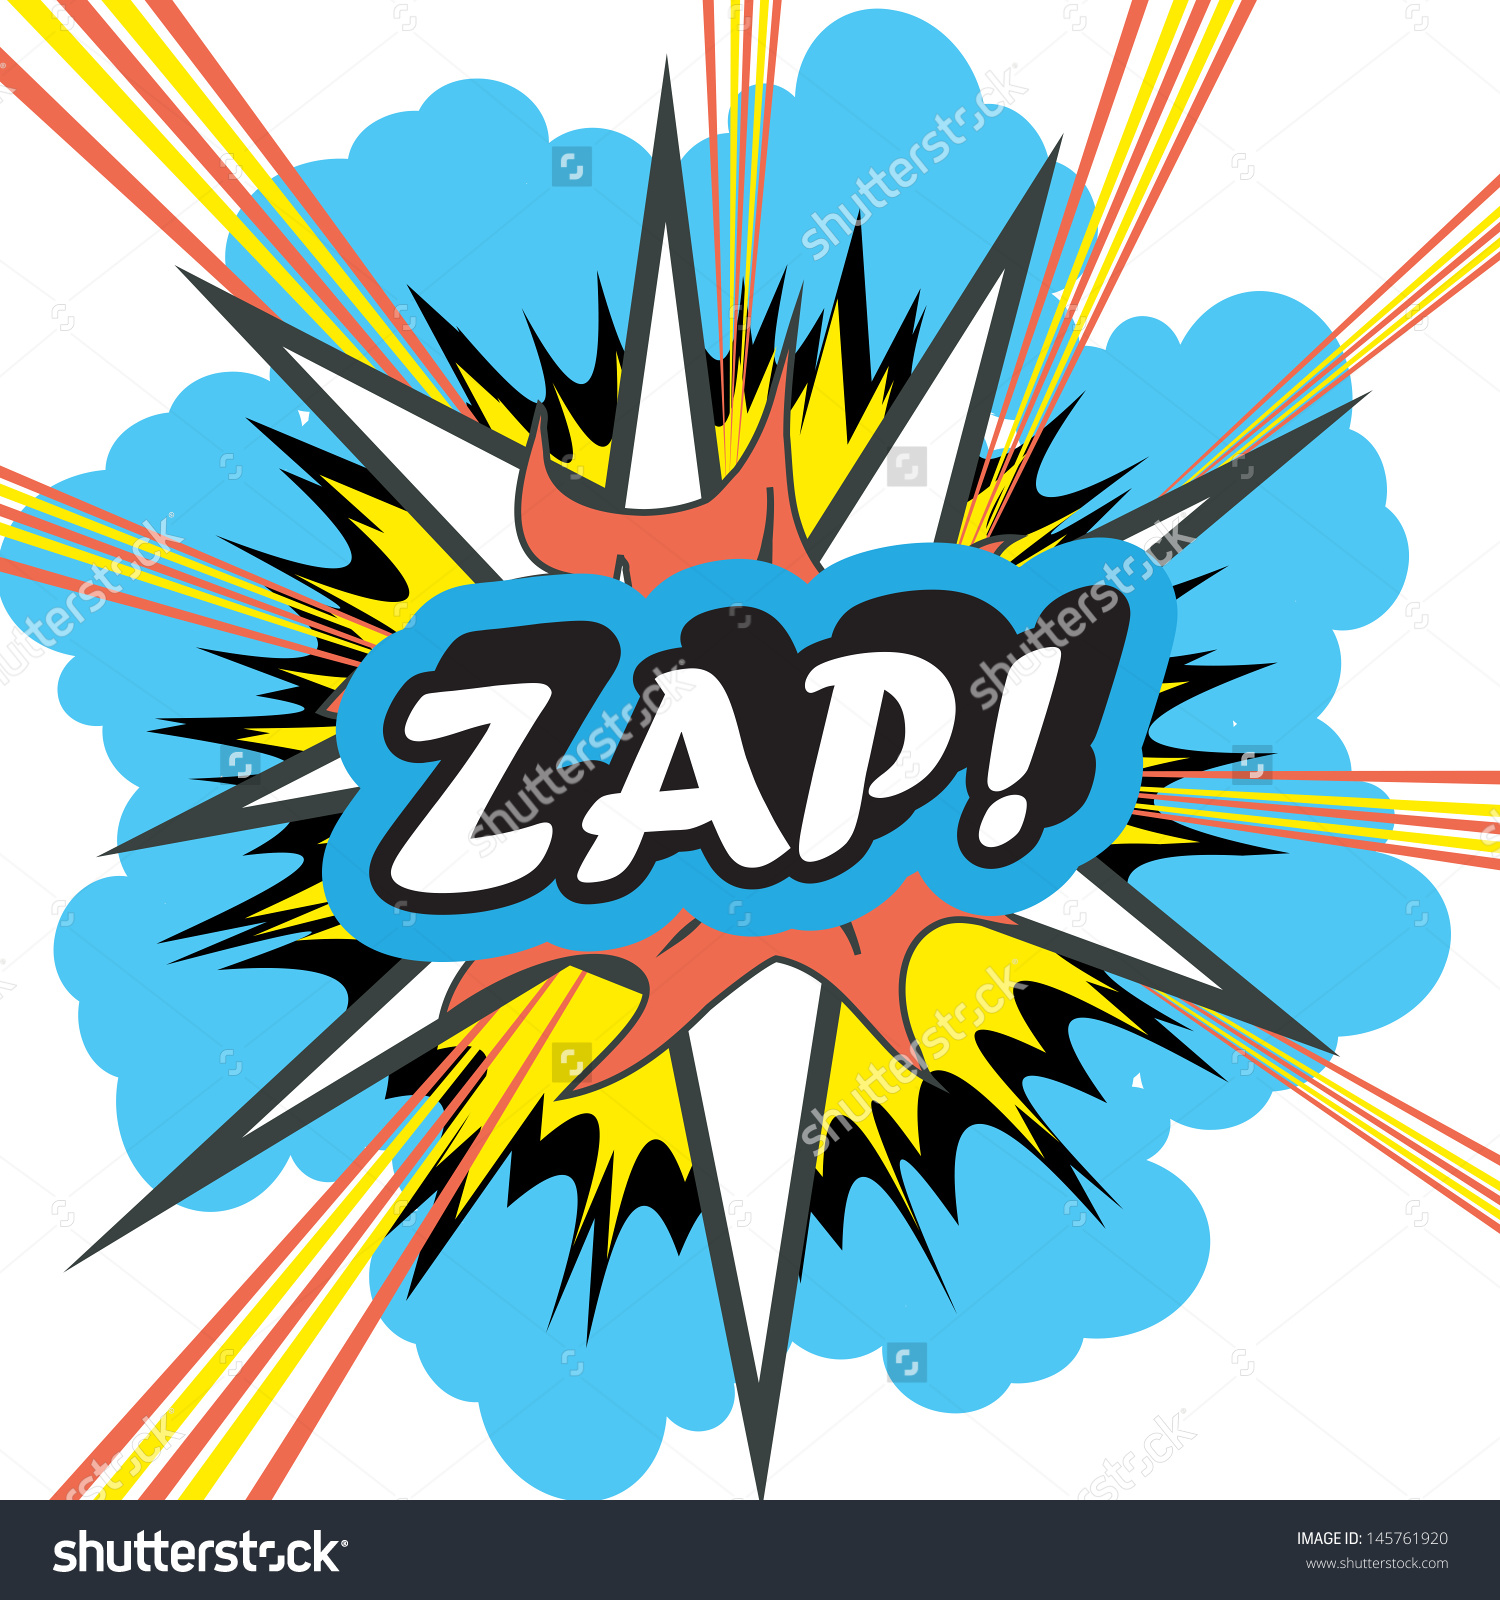 Zap HD wallpapers, Desktop wallpaper - most viewed